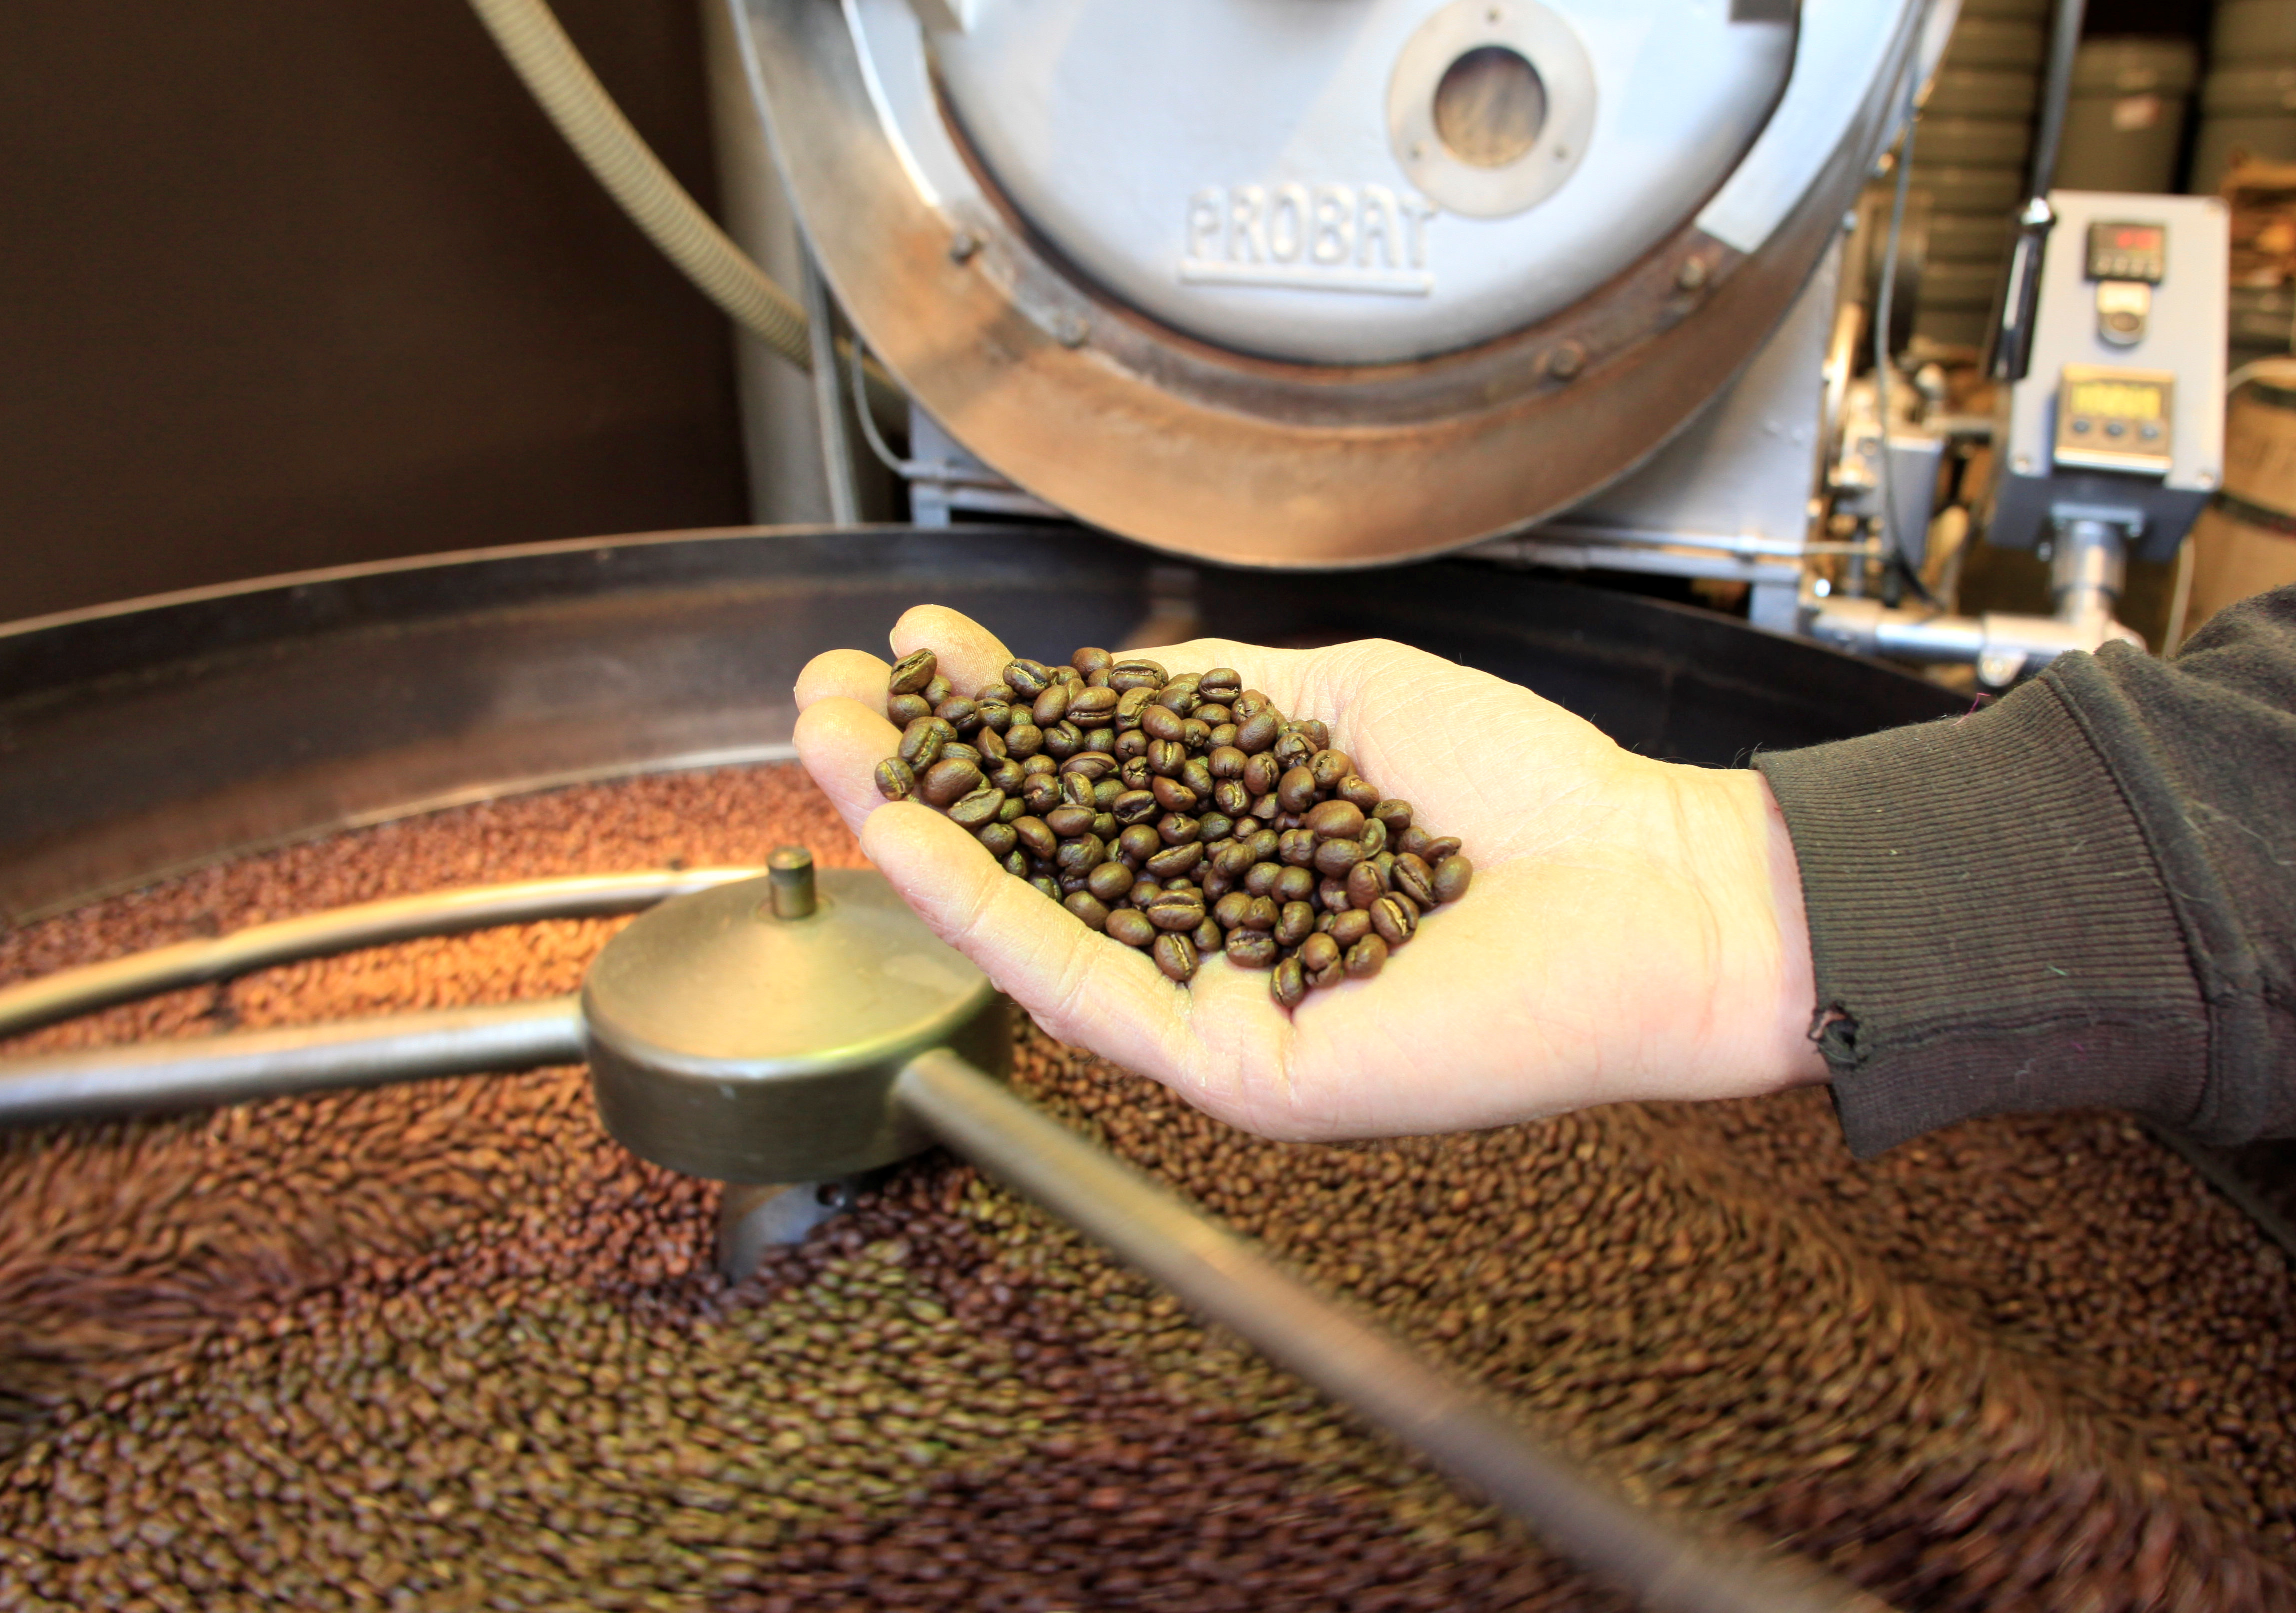 An employee checks freshly roasted coffee beans at H. Schwarzenbach coffee roastery in Zurich